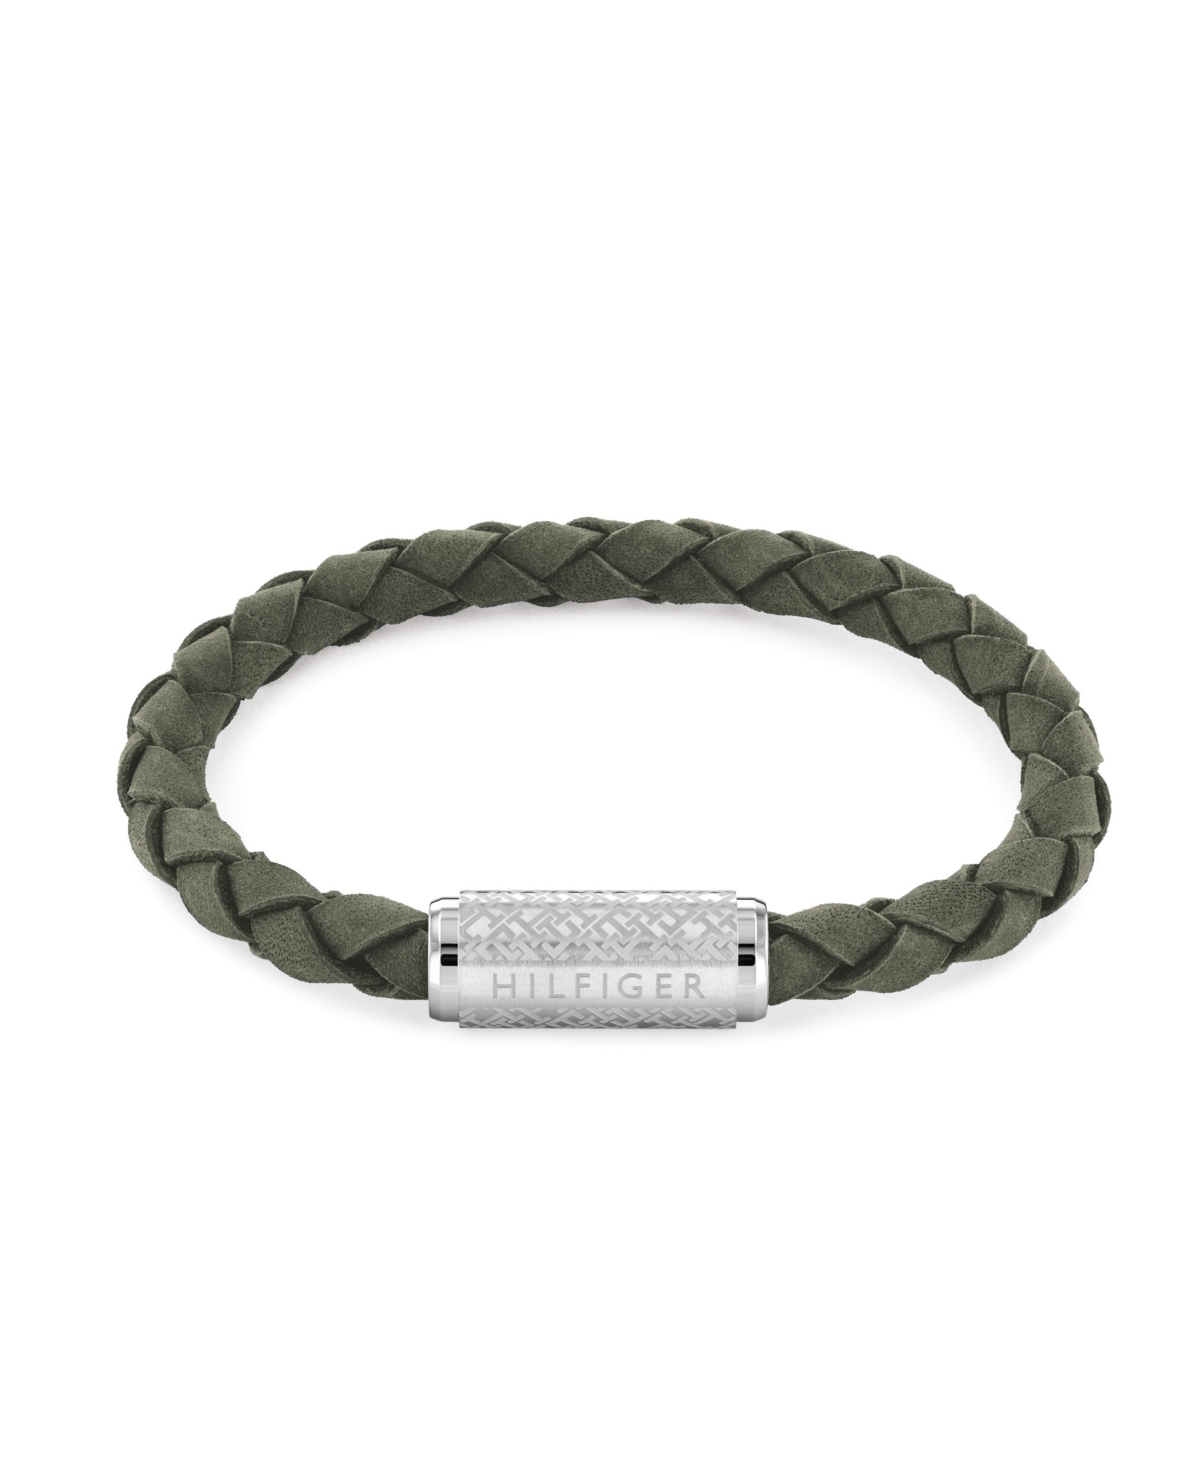 Tommy Hilfiger Men's Braided Green Suede Leather Bracelet